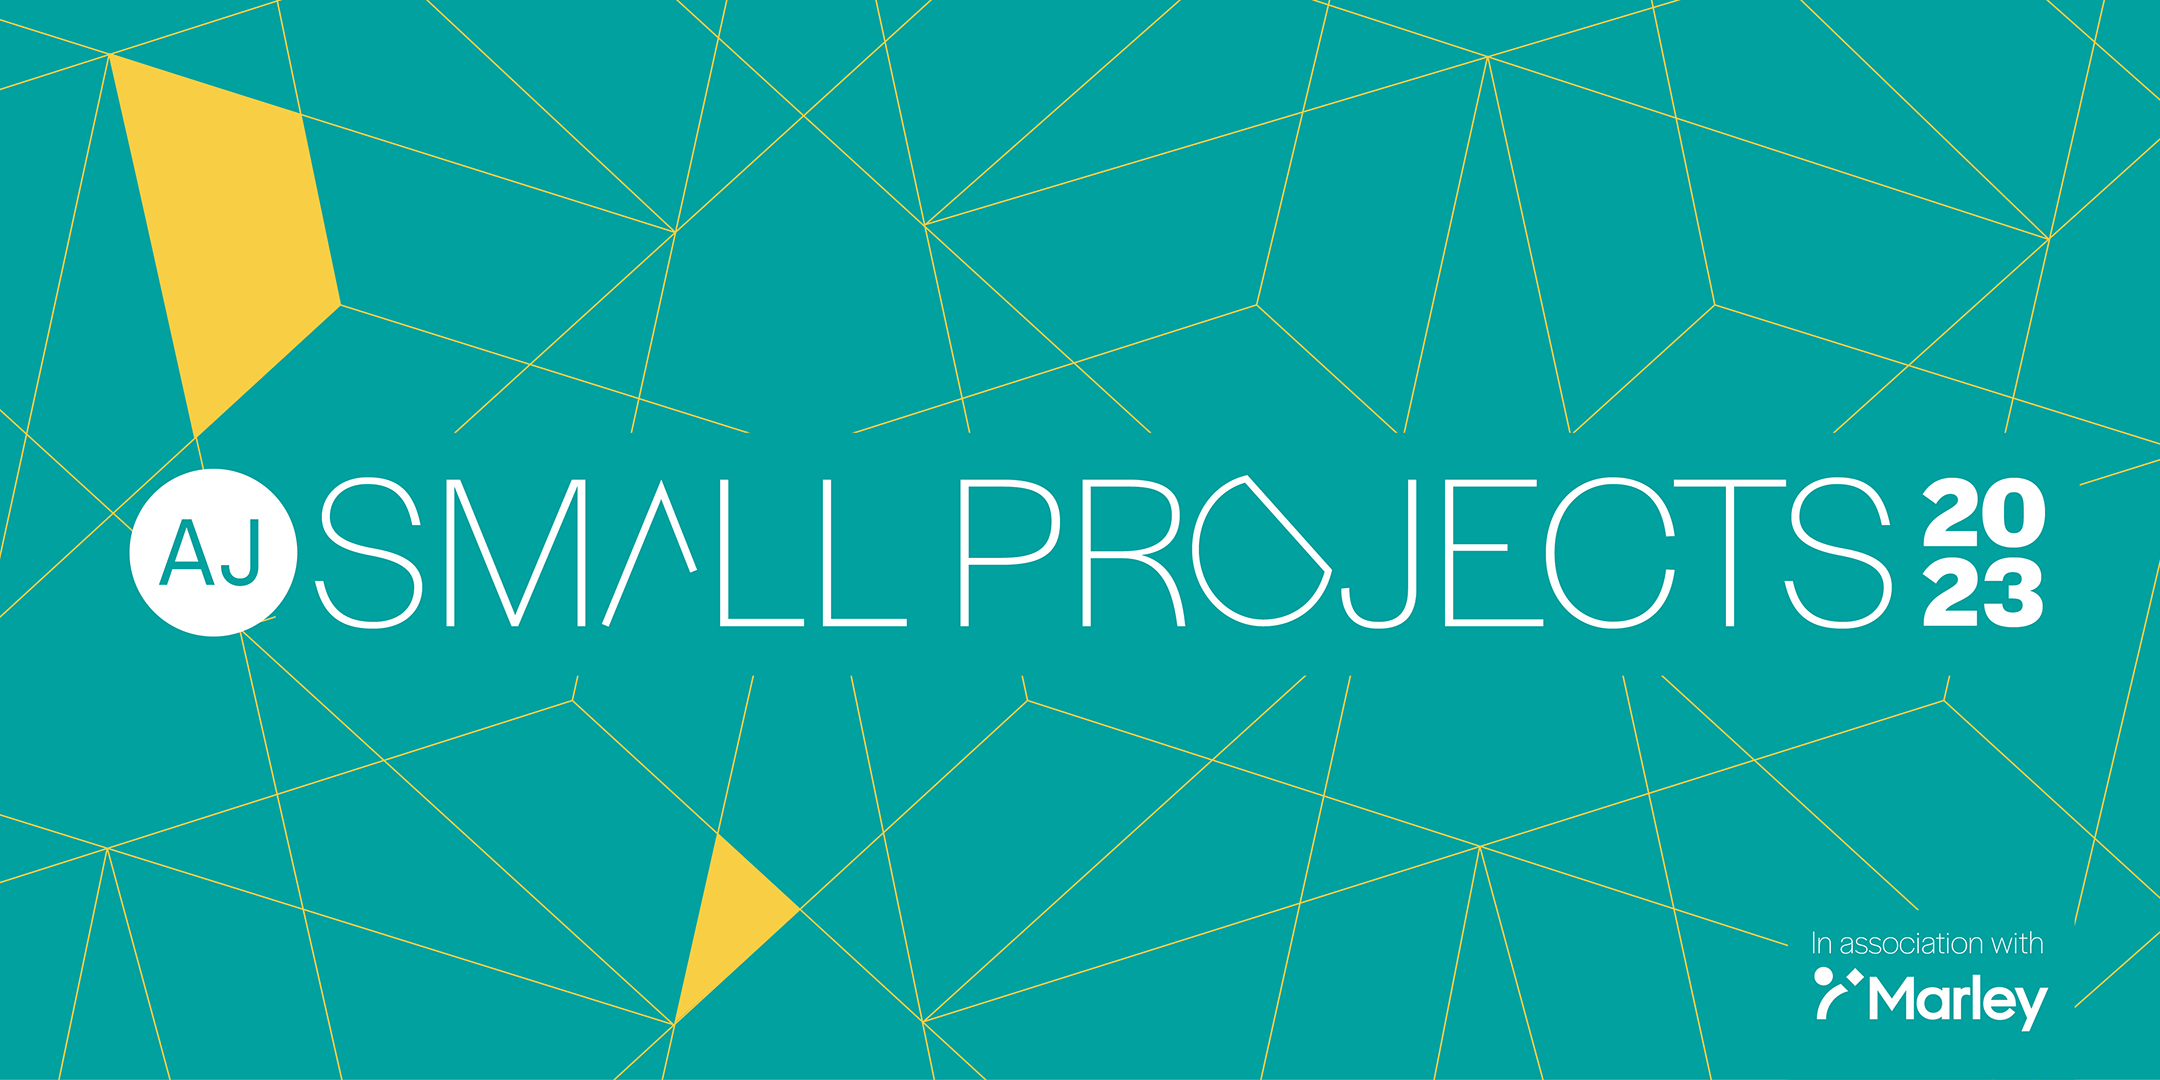 AJ Small Projects 2023